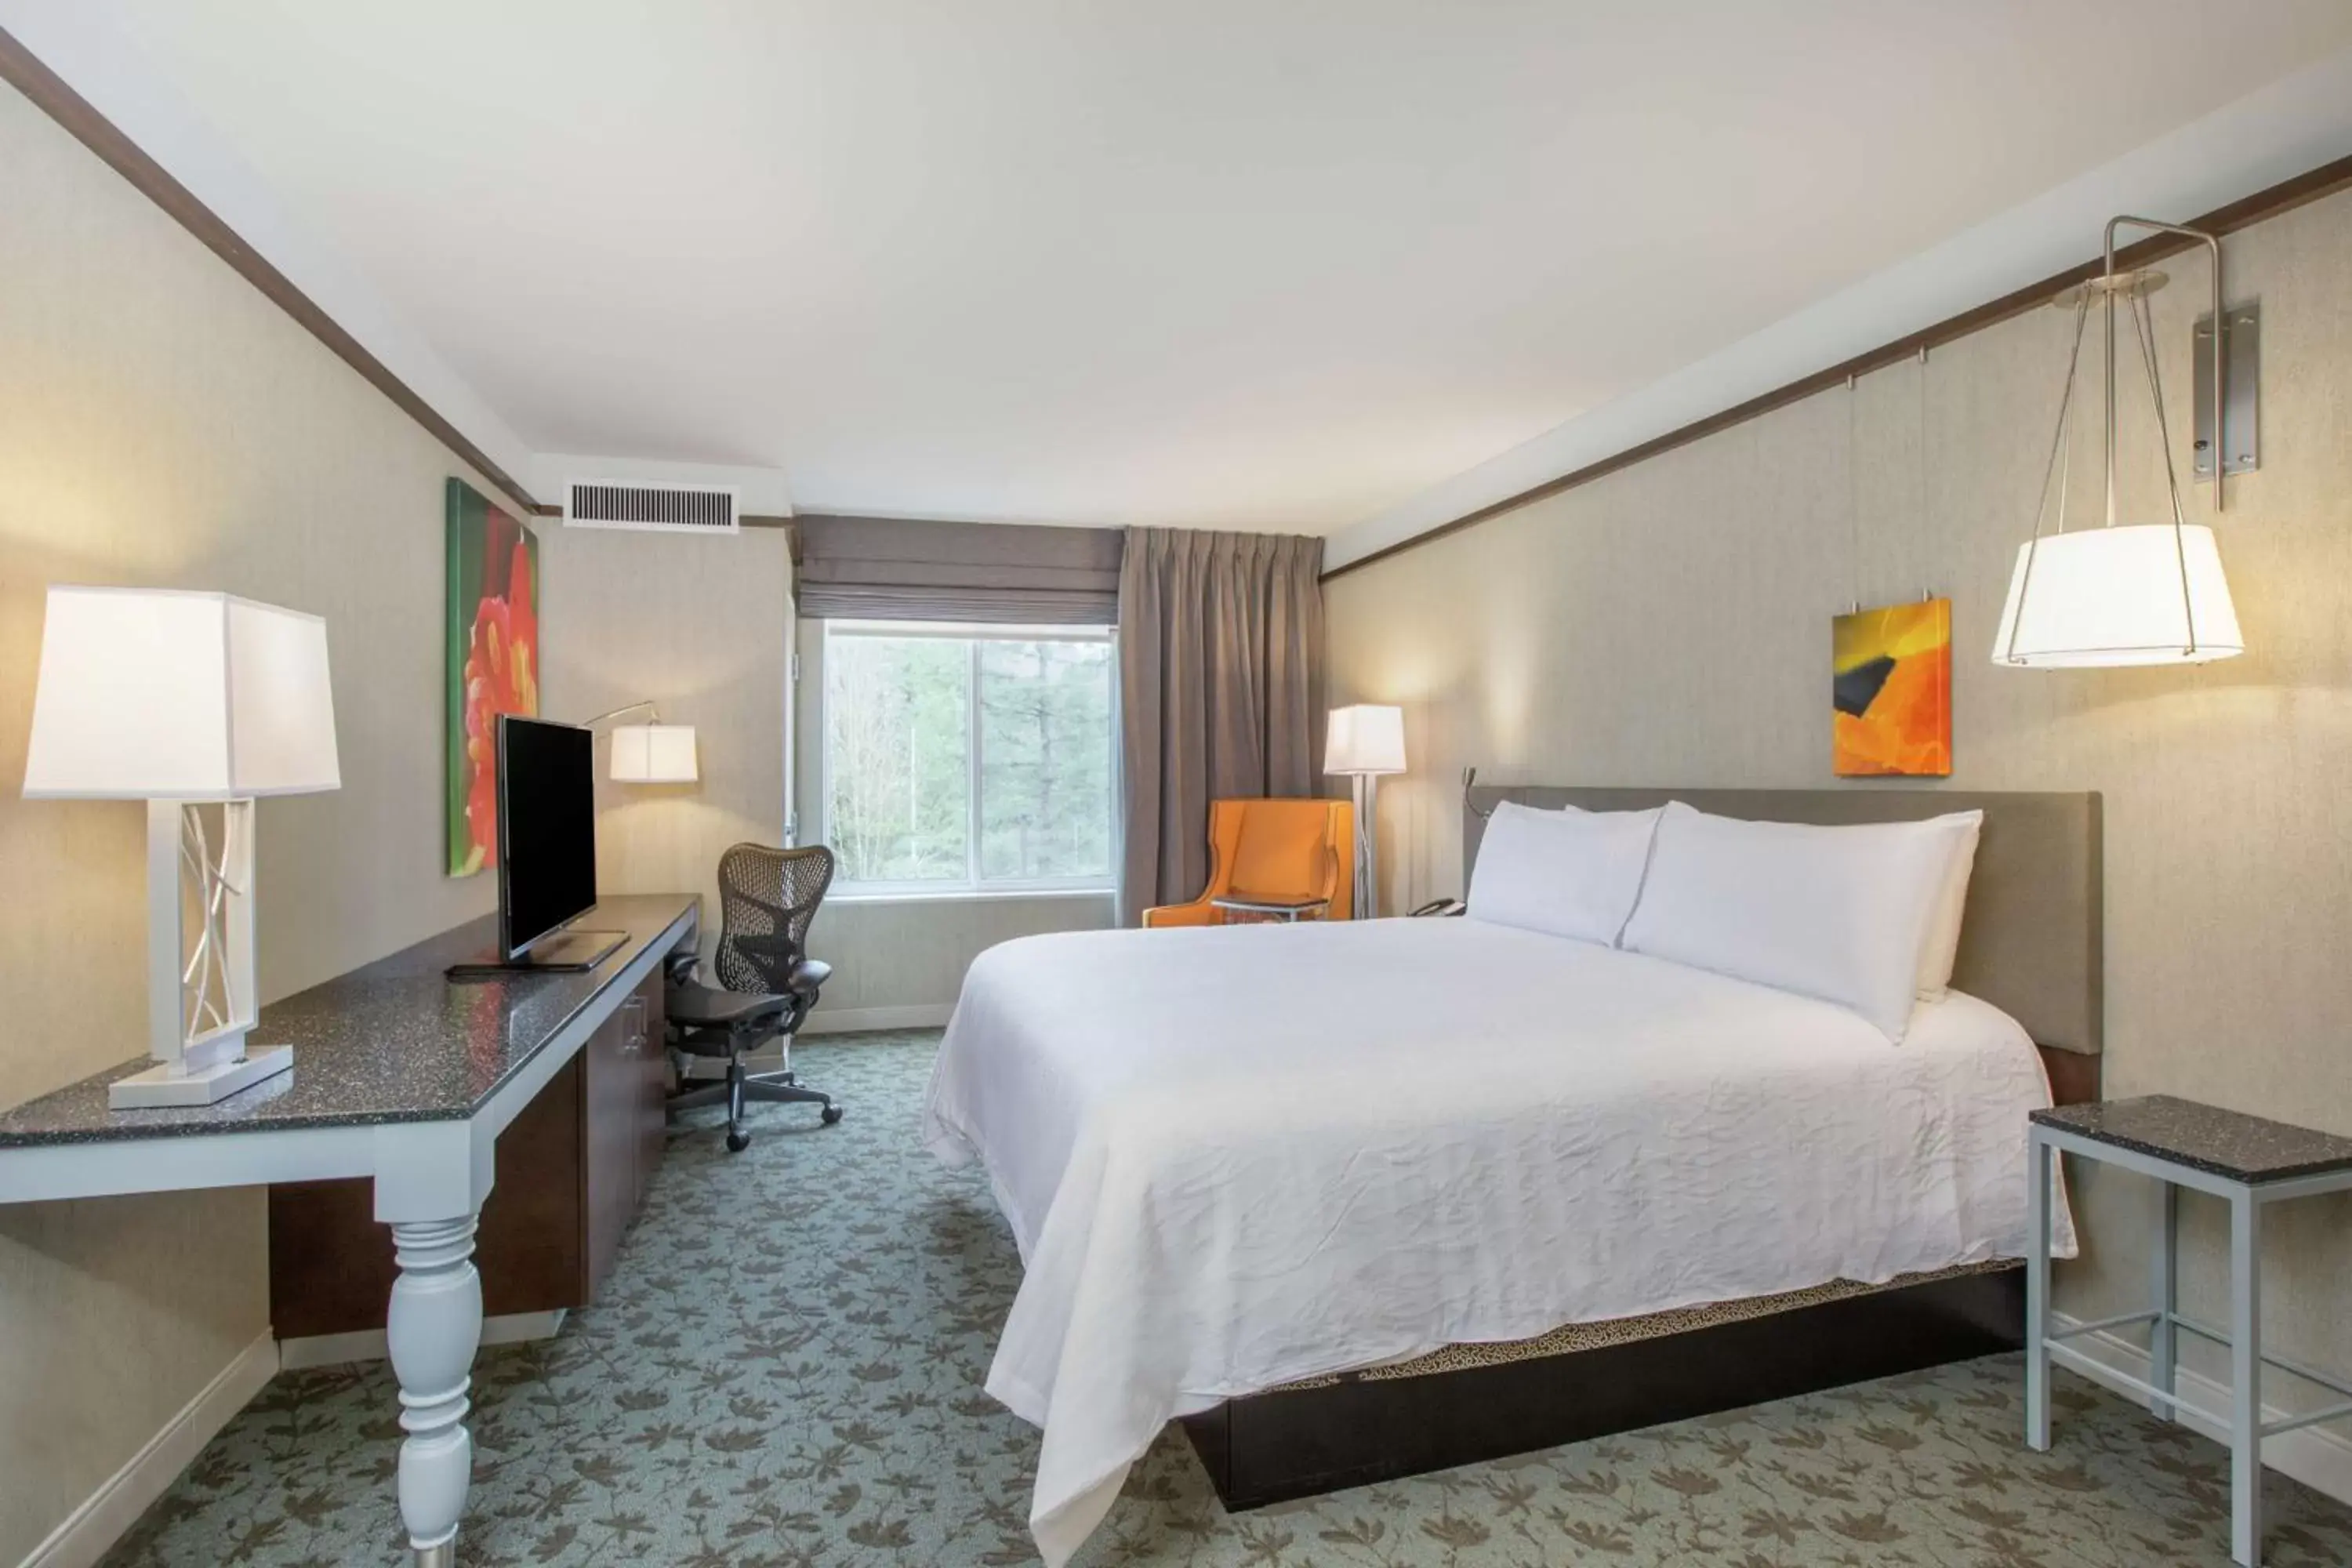 Bedroom in Hilton Garden Inn Olympia, WA